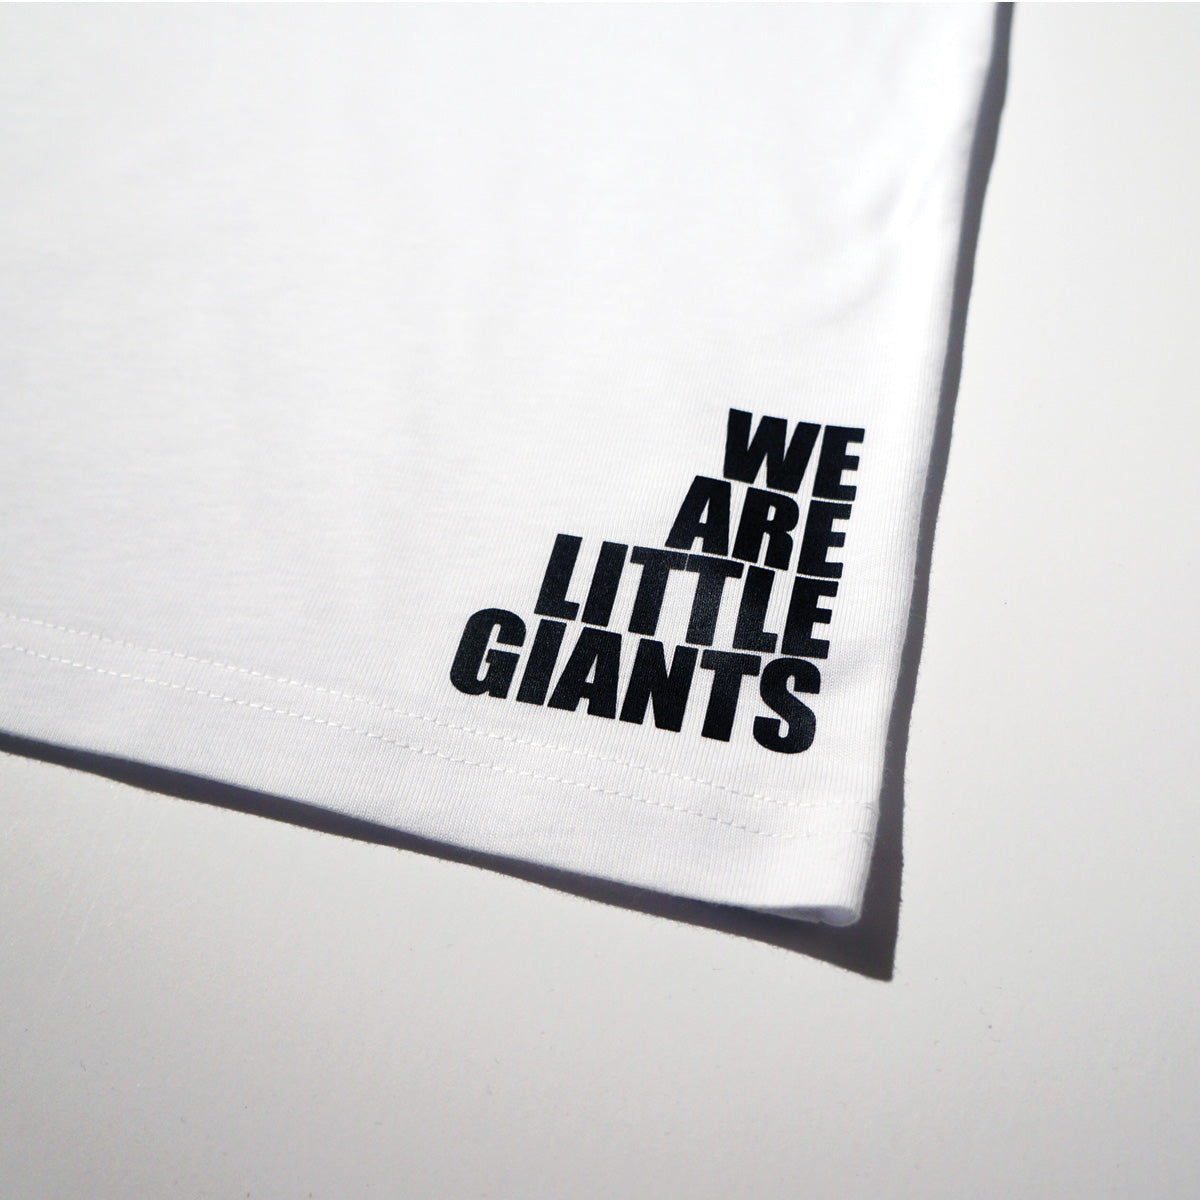 WeAreLittleGiants T-shirt (White)